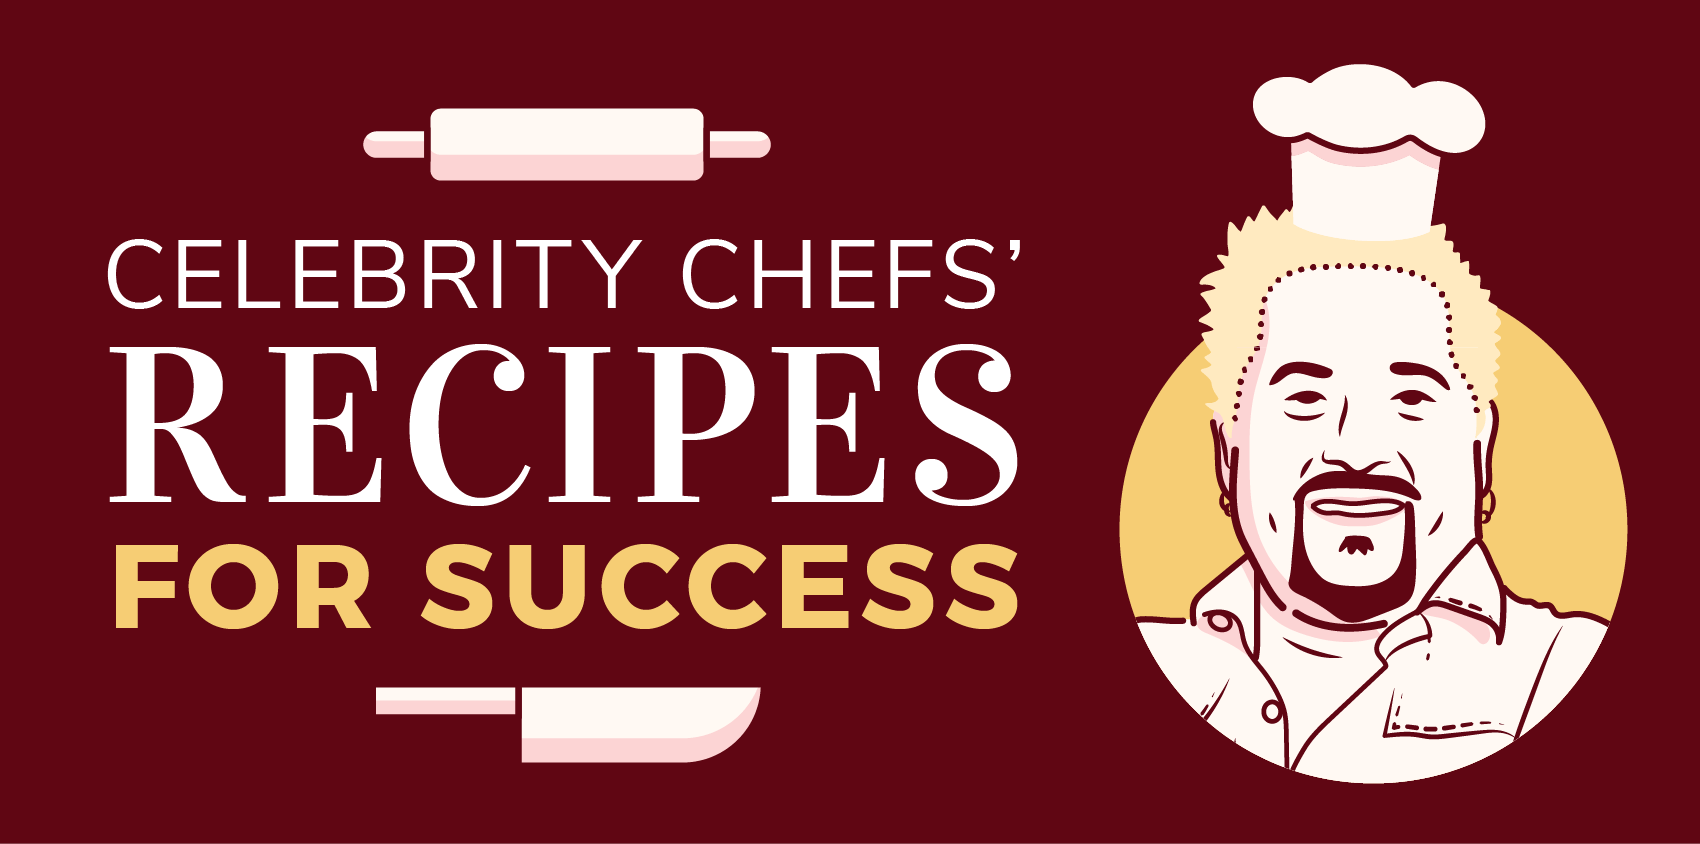 celebrity chef recipes for success hero image